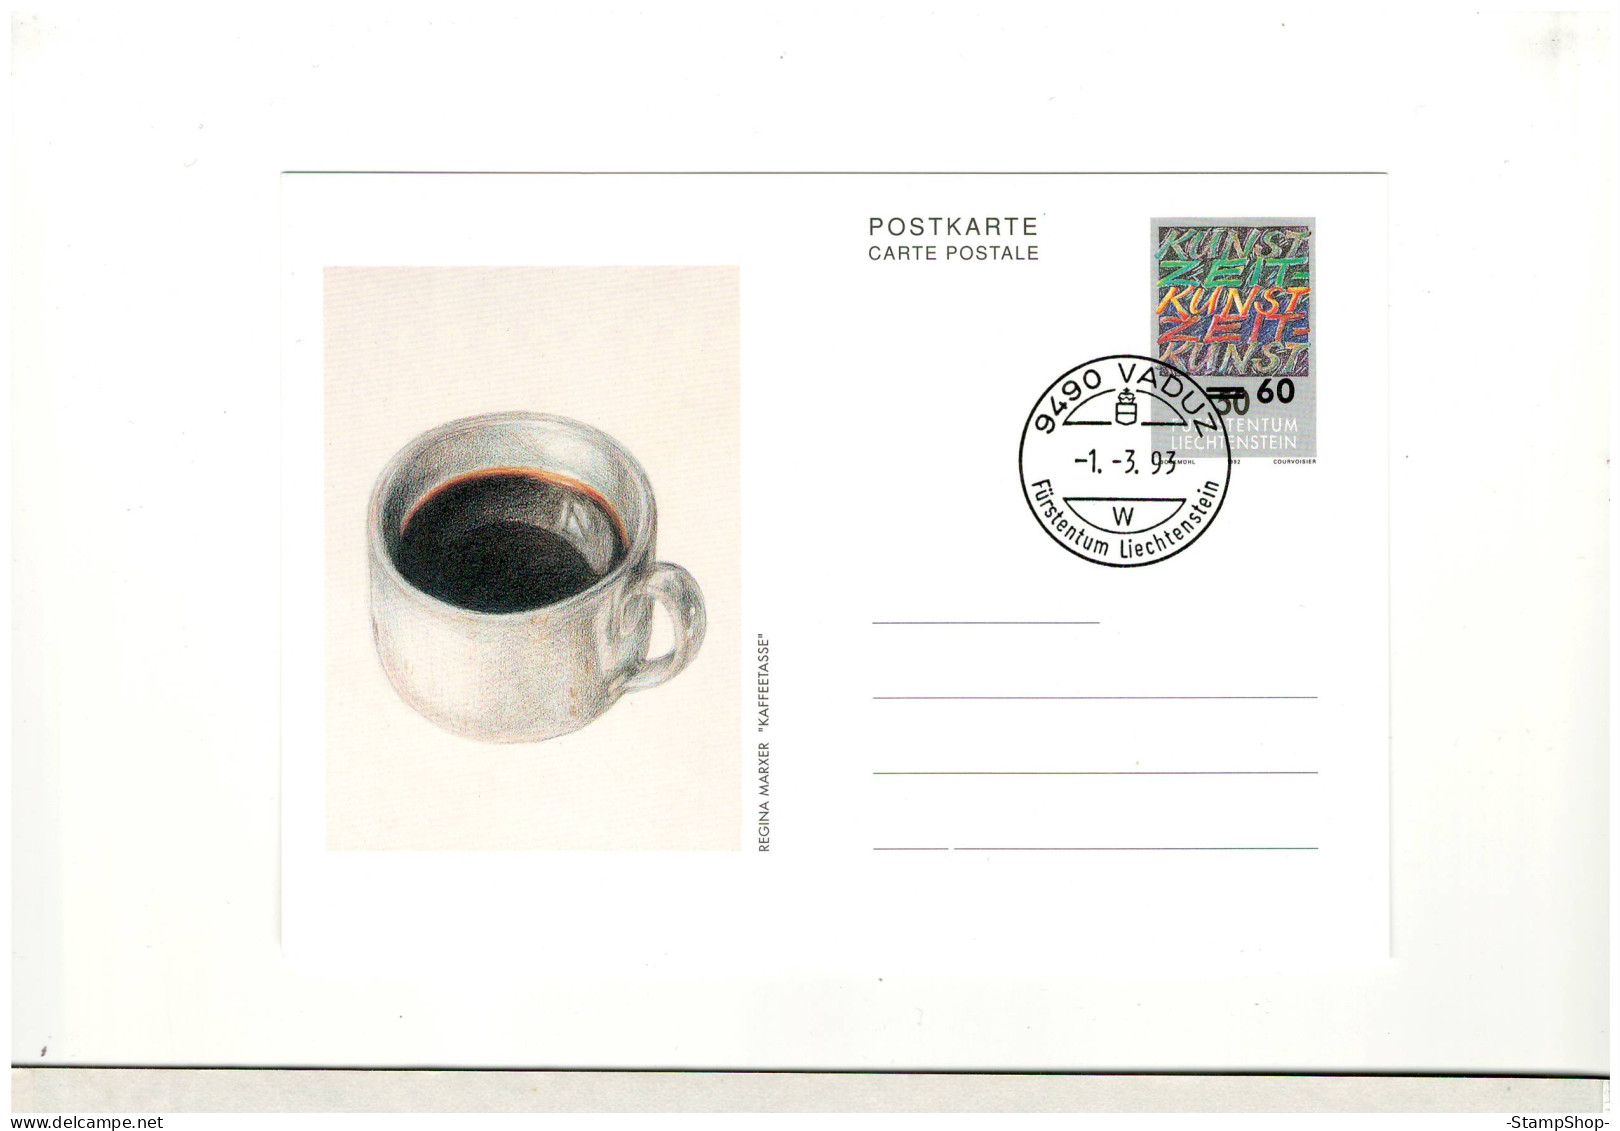 1993 Liechtenstein - Vaduz Postmark, Art, Overprint With Higher Value - Postcard - BX2052 - Lettres & Documents